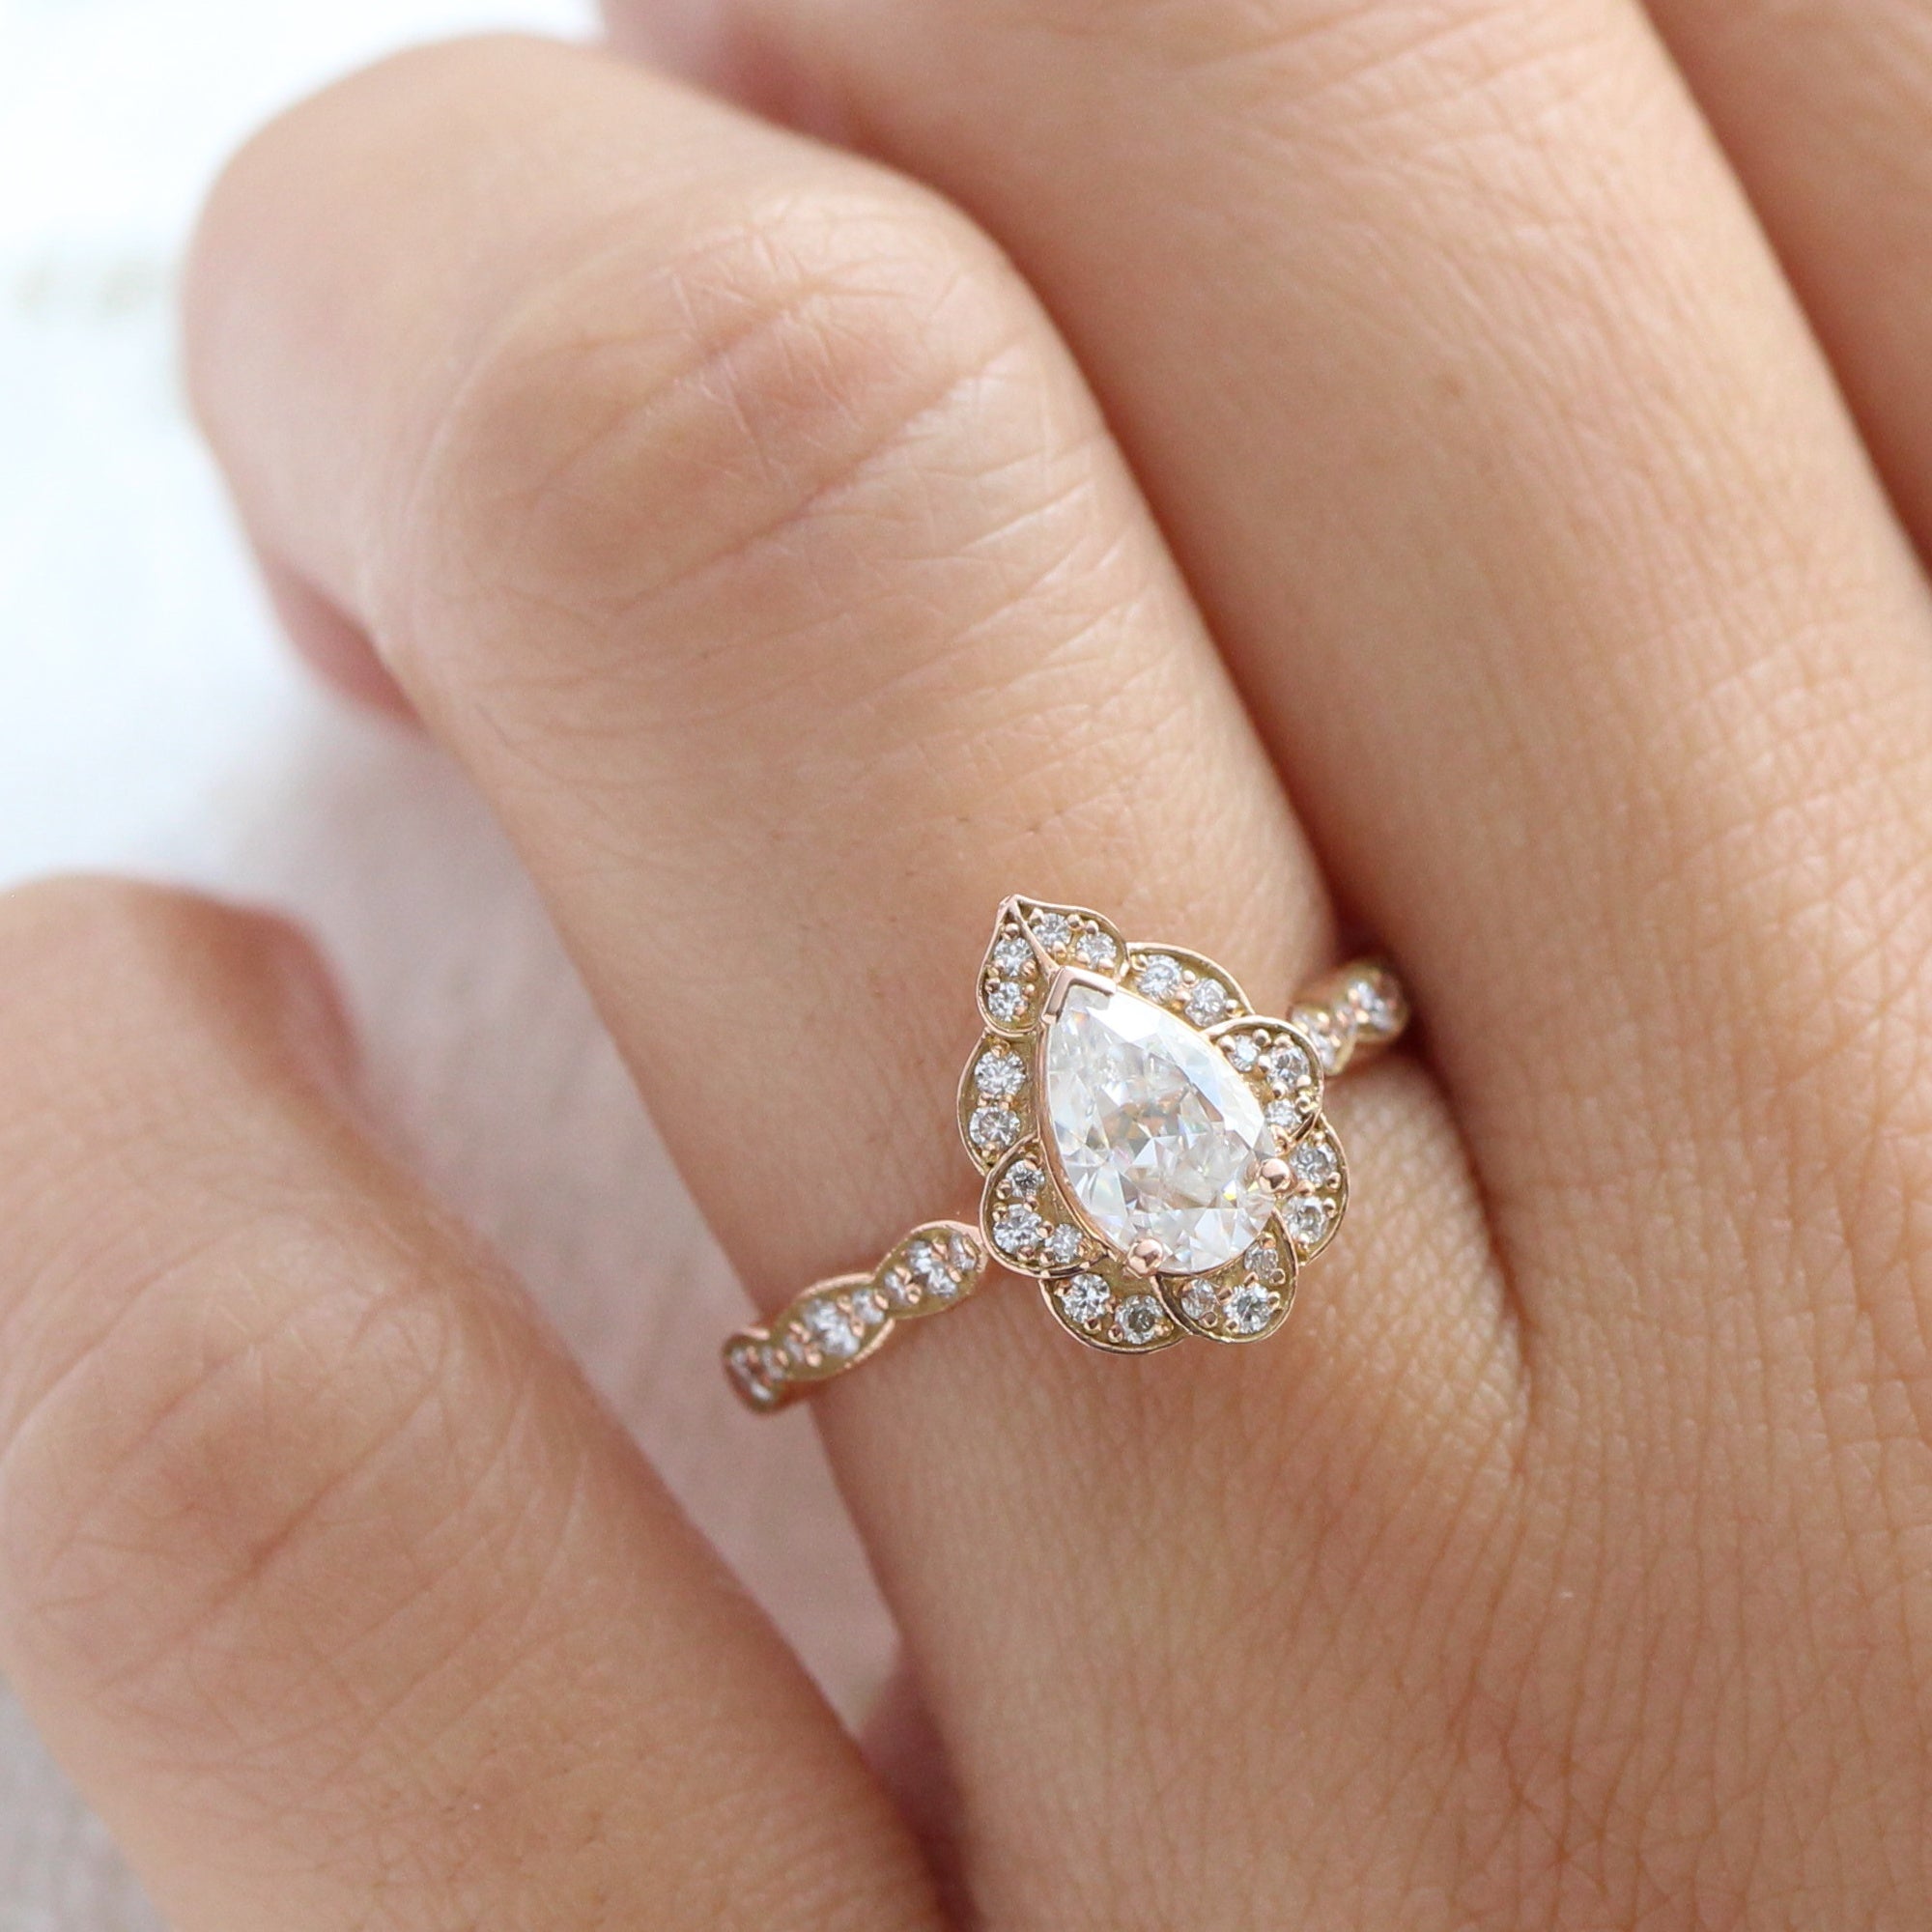 Antique Inspired Flower Ring-Champagne Diamonds